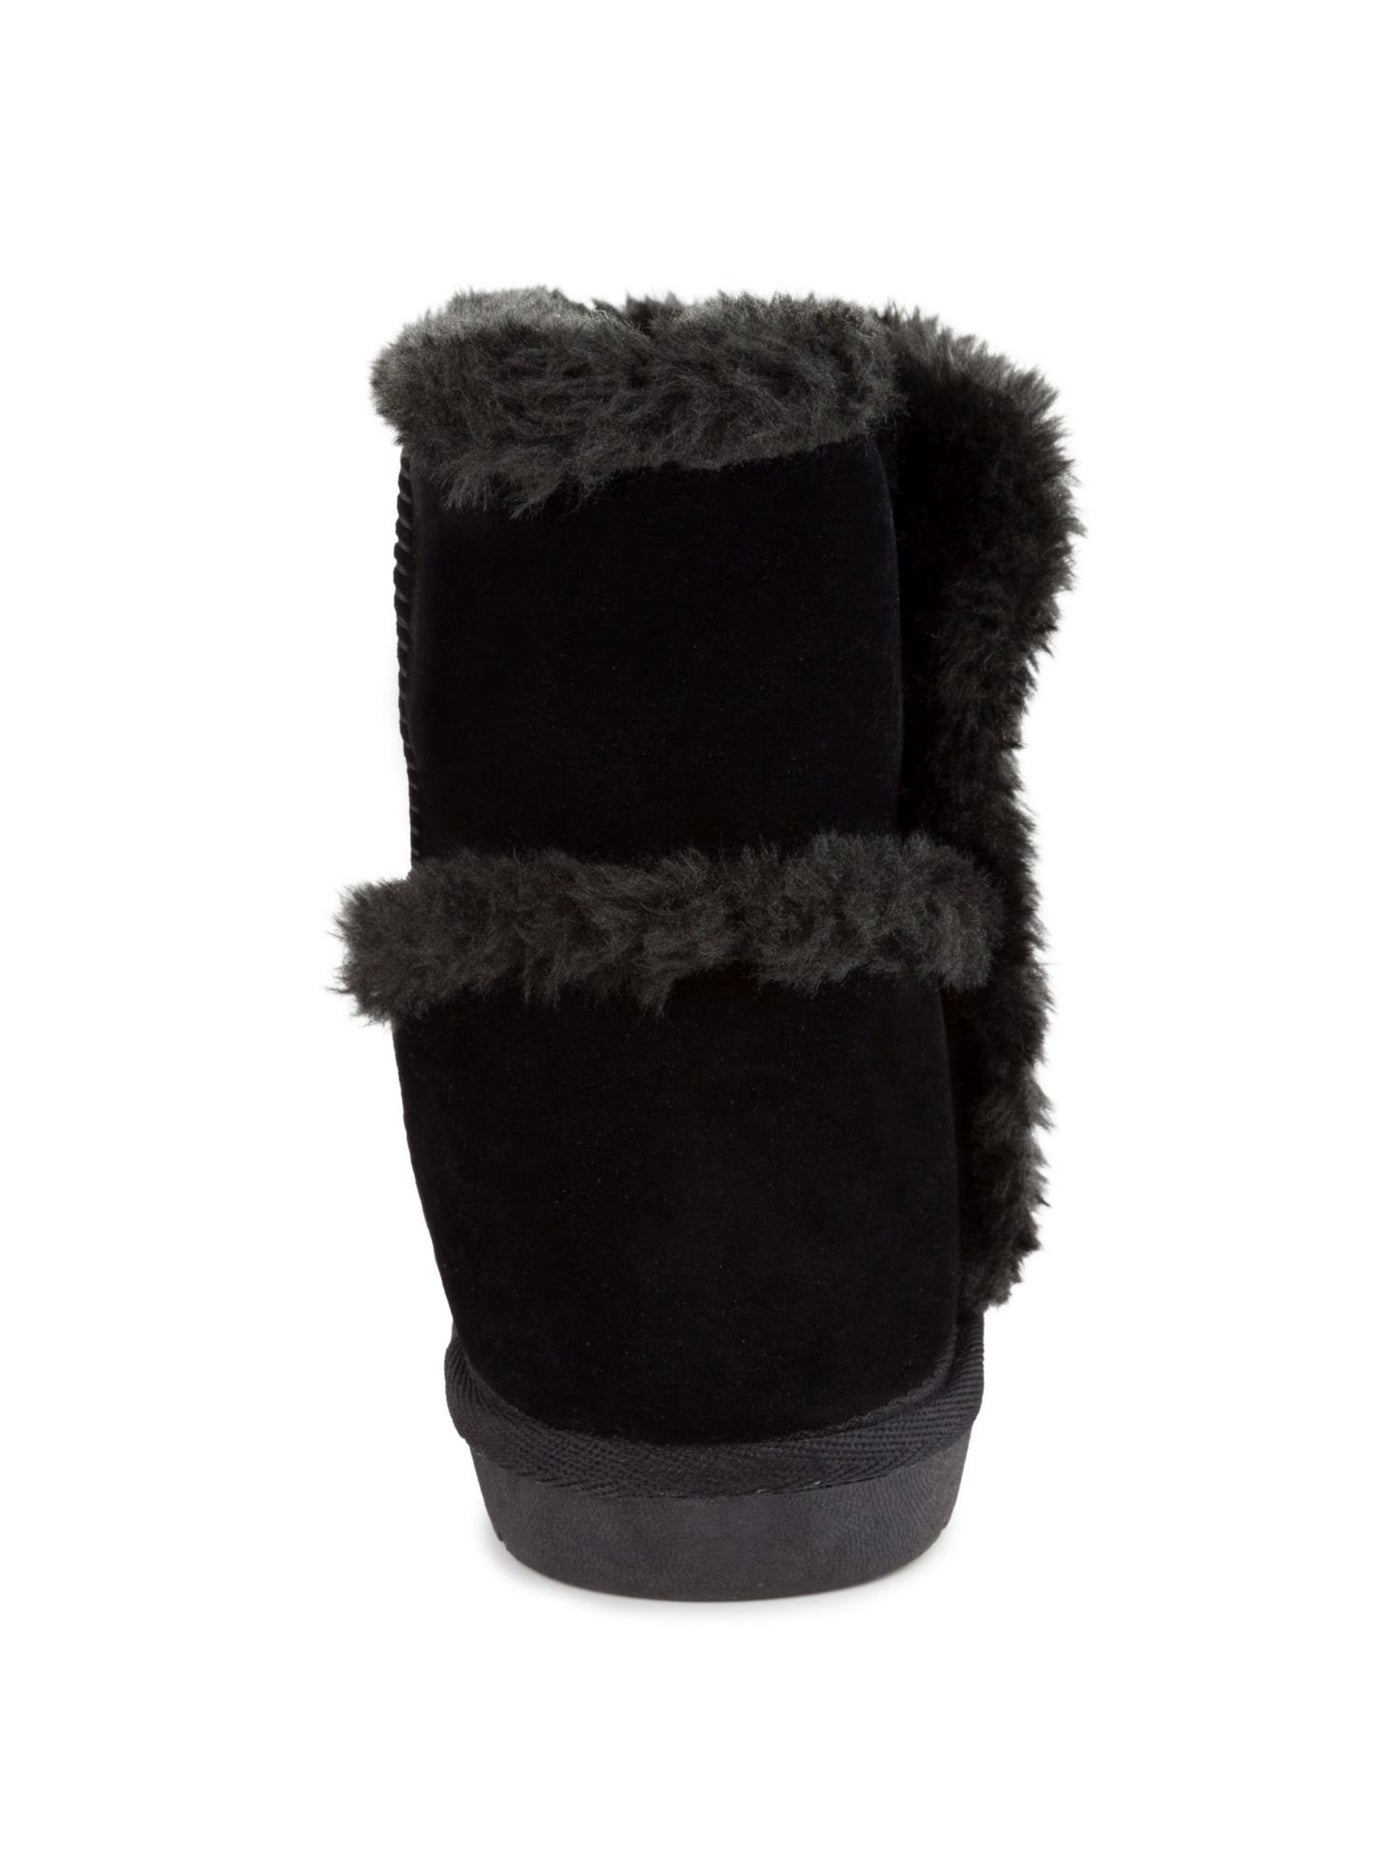 SUGAR Womens Black Comfort Poppy Round Toe Snow Boots 9 M